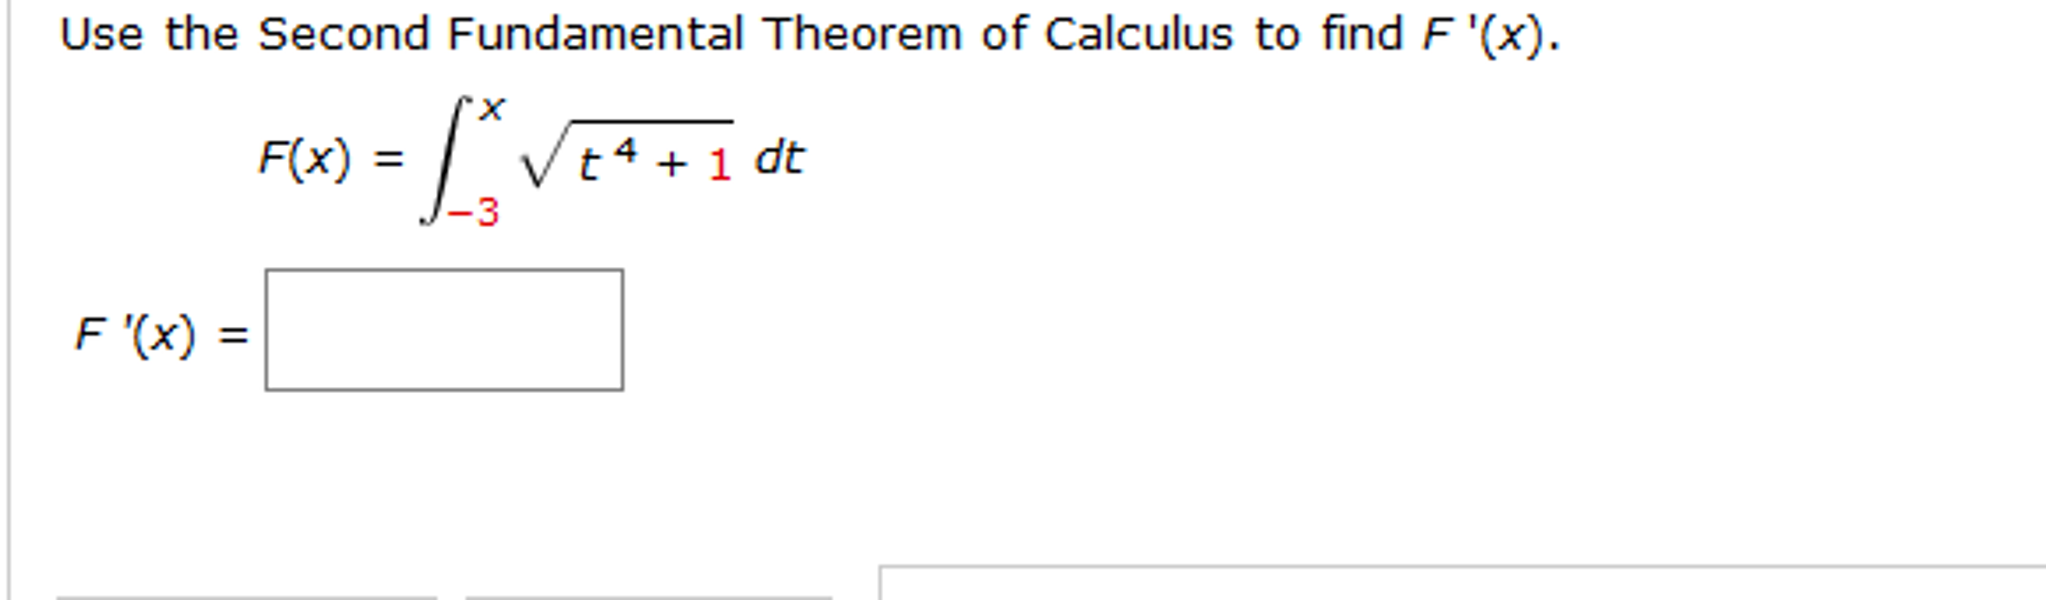 second fundamental theorem of calculus homework answers